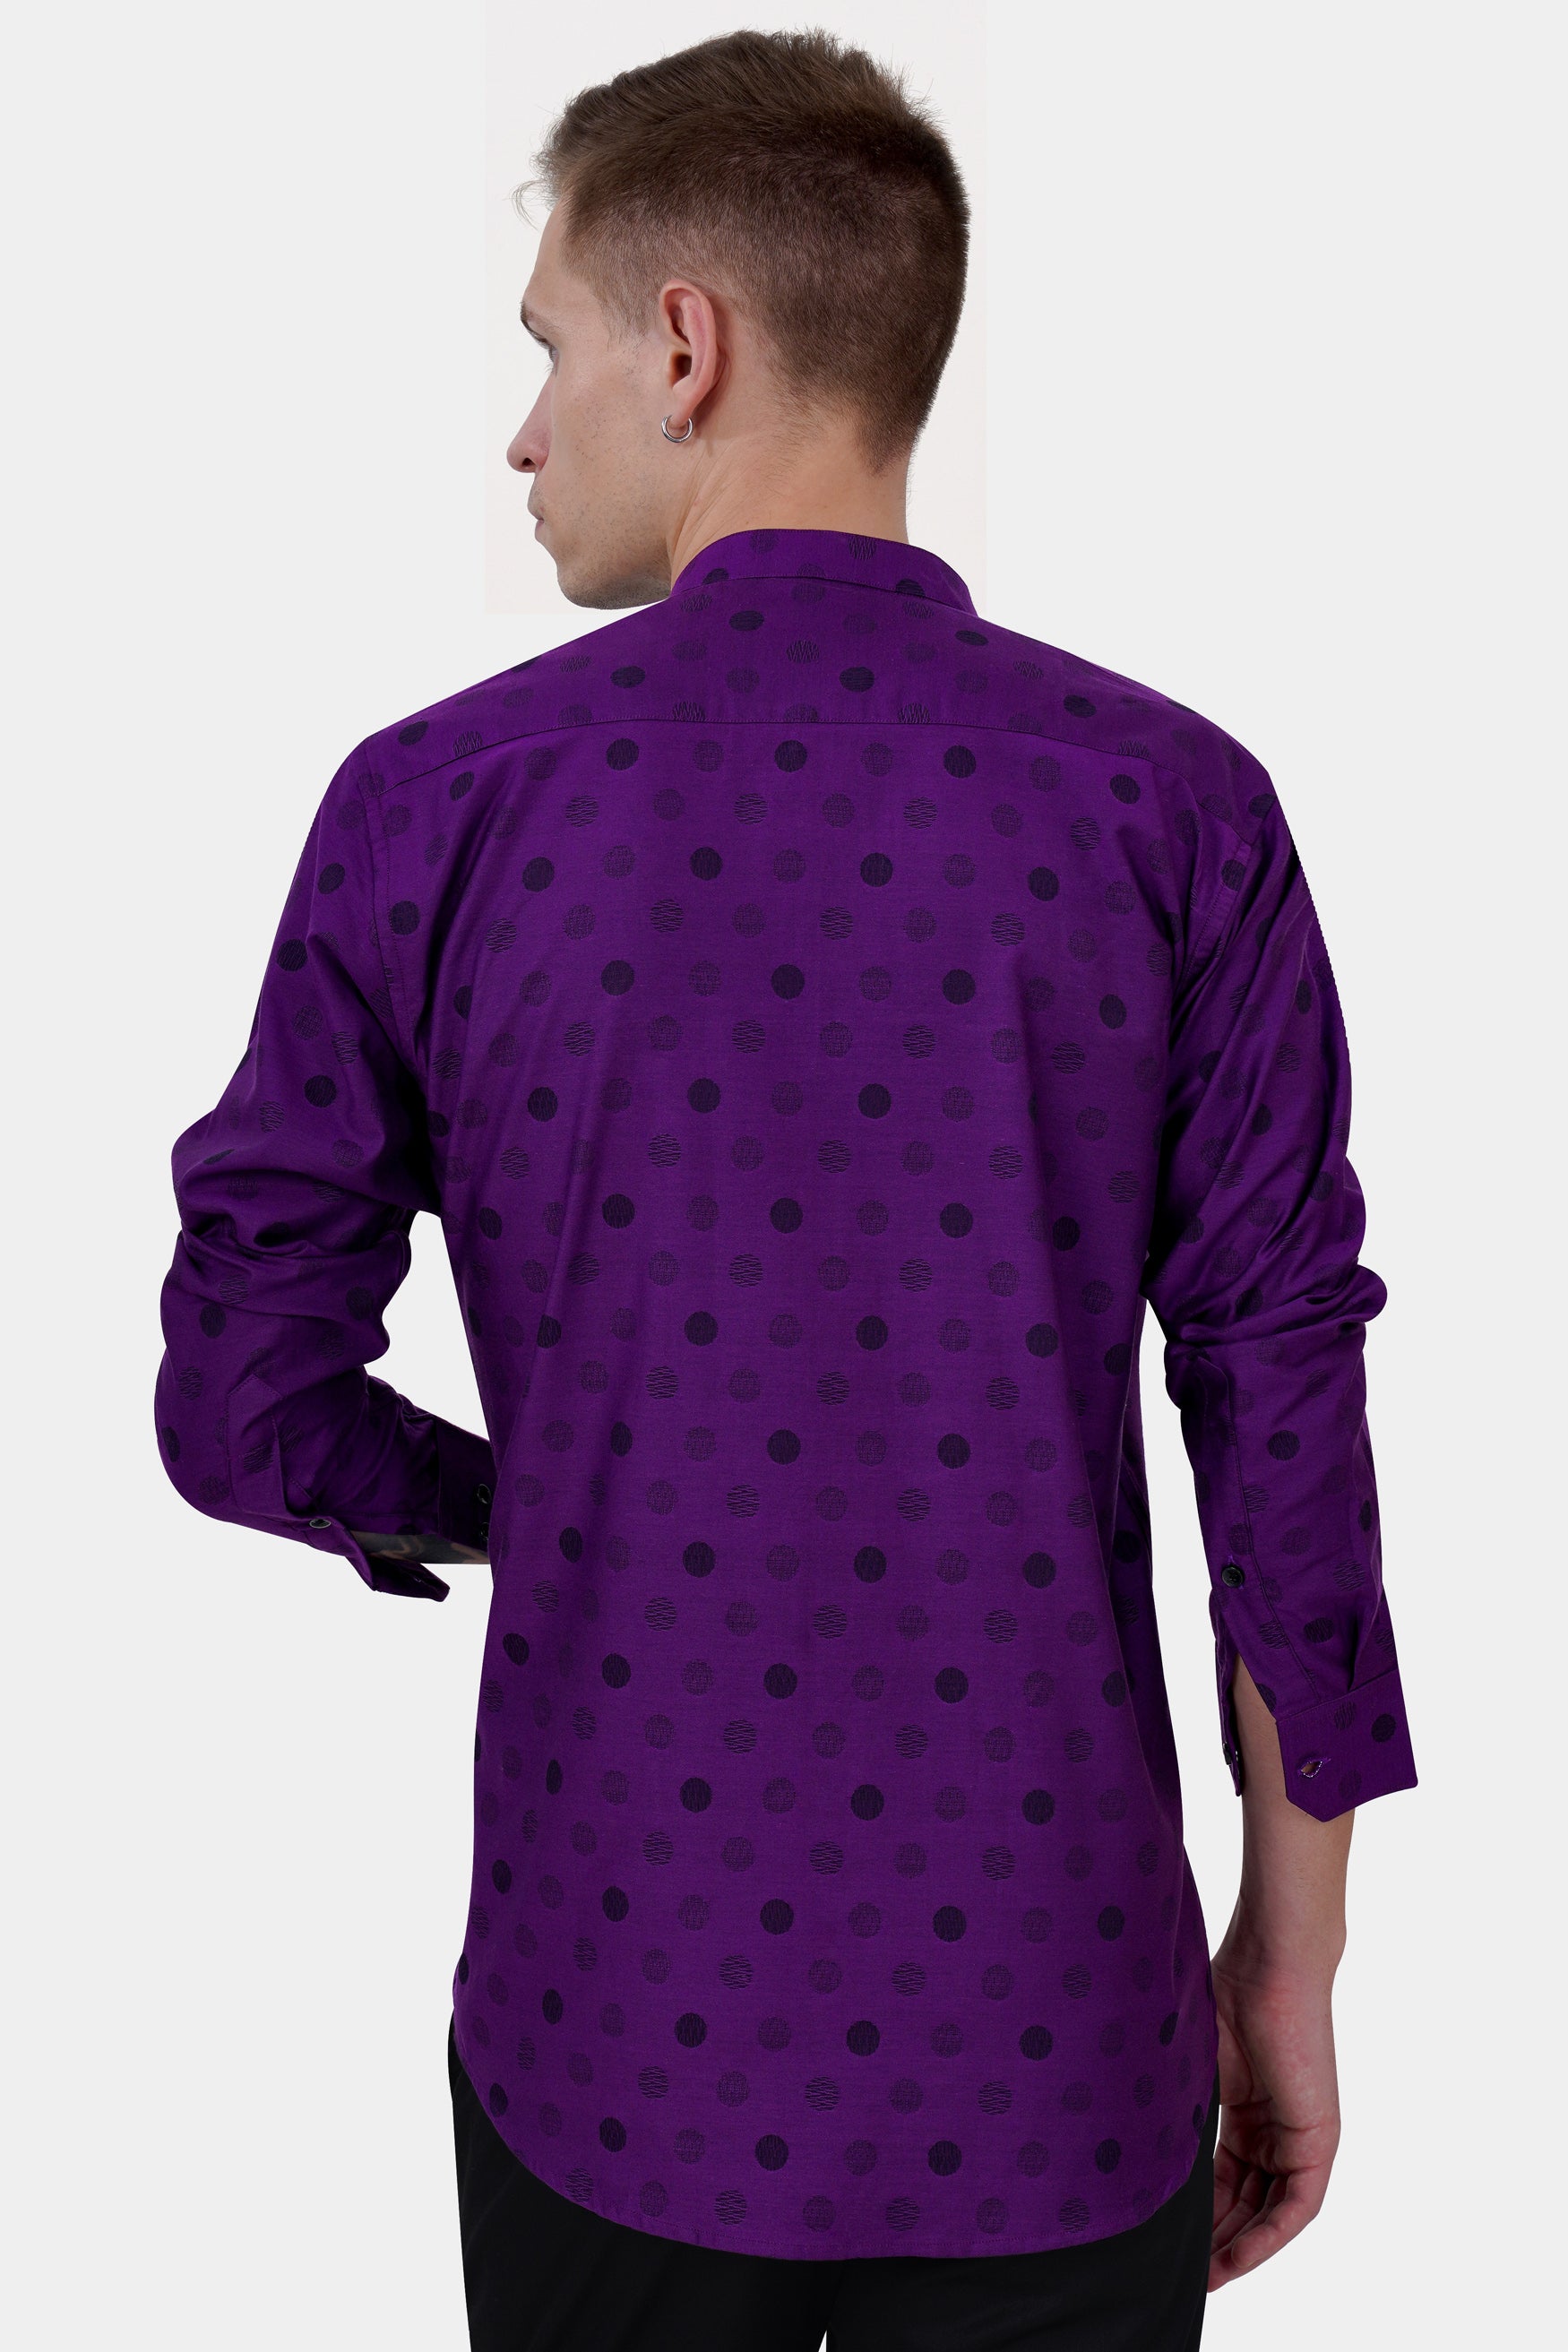 Valentino Purple with Haiti Blue and Plum Purple Polka Dotted Jacquard Textured Premium Giza Cotton Shirt 11751-M-BLK-38, 11751-M-BLK-H-38, 11751-M-BLK-39, 11751-M-BLK-H-39, 11751-M-BLK-40, 11751-M-BLK-H-40, 11751-M-BLK-42, 11751-M-BLK-H-42, 11751-M-BLK-44, 11751-M-BLK-H-44, 11751-M-BLK-46, 11751-M-BLK-H-46, 11751-M-BLK-48, 11751-M-BLK-H-48, 11751-M-BLK-50, 11751-M-BLK-H-50, 11751-M-BLK-52, 11751-M-BLK-H-52